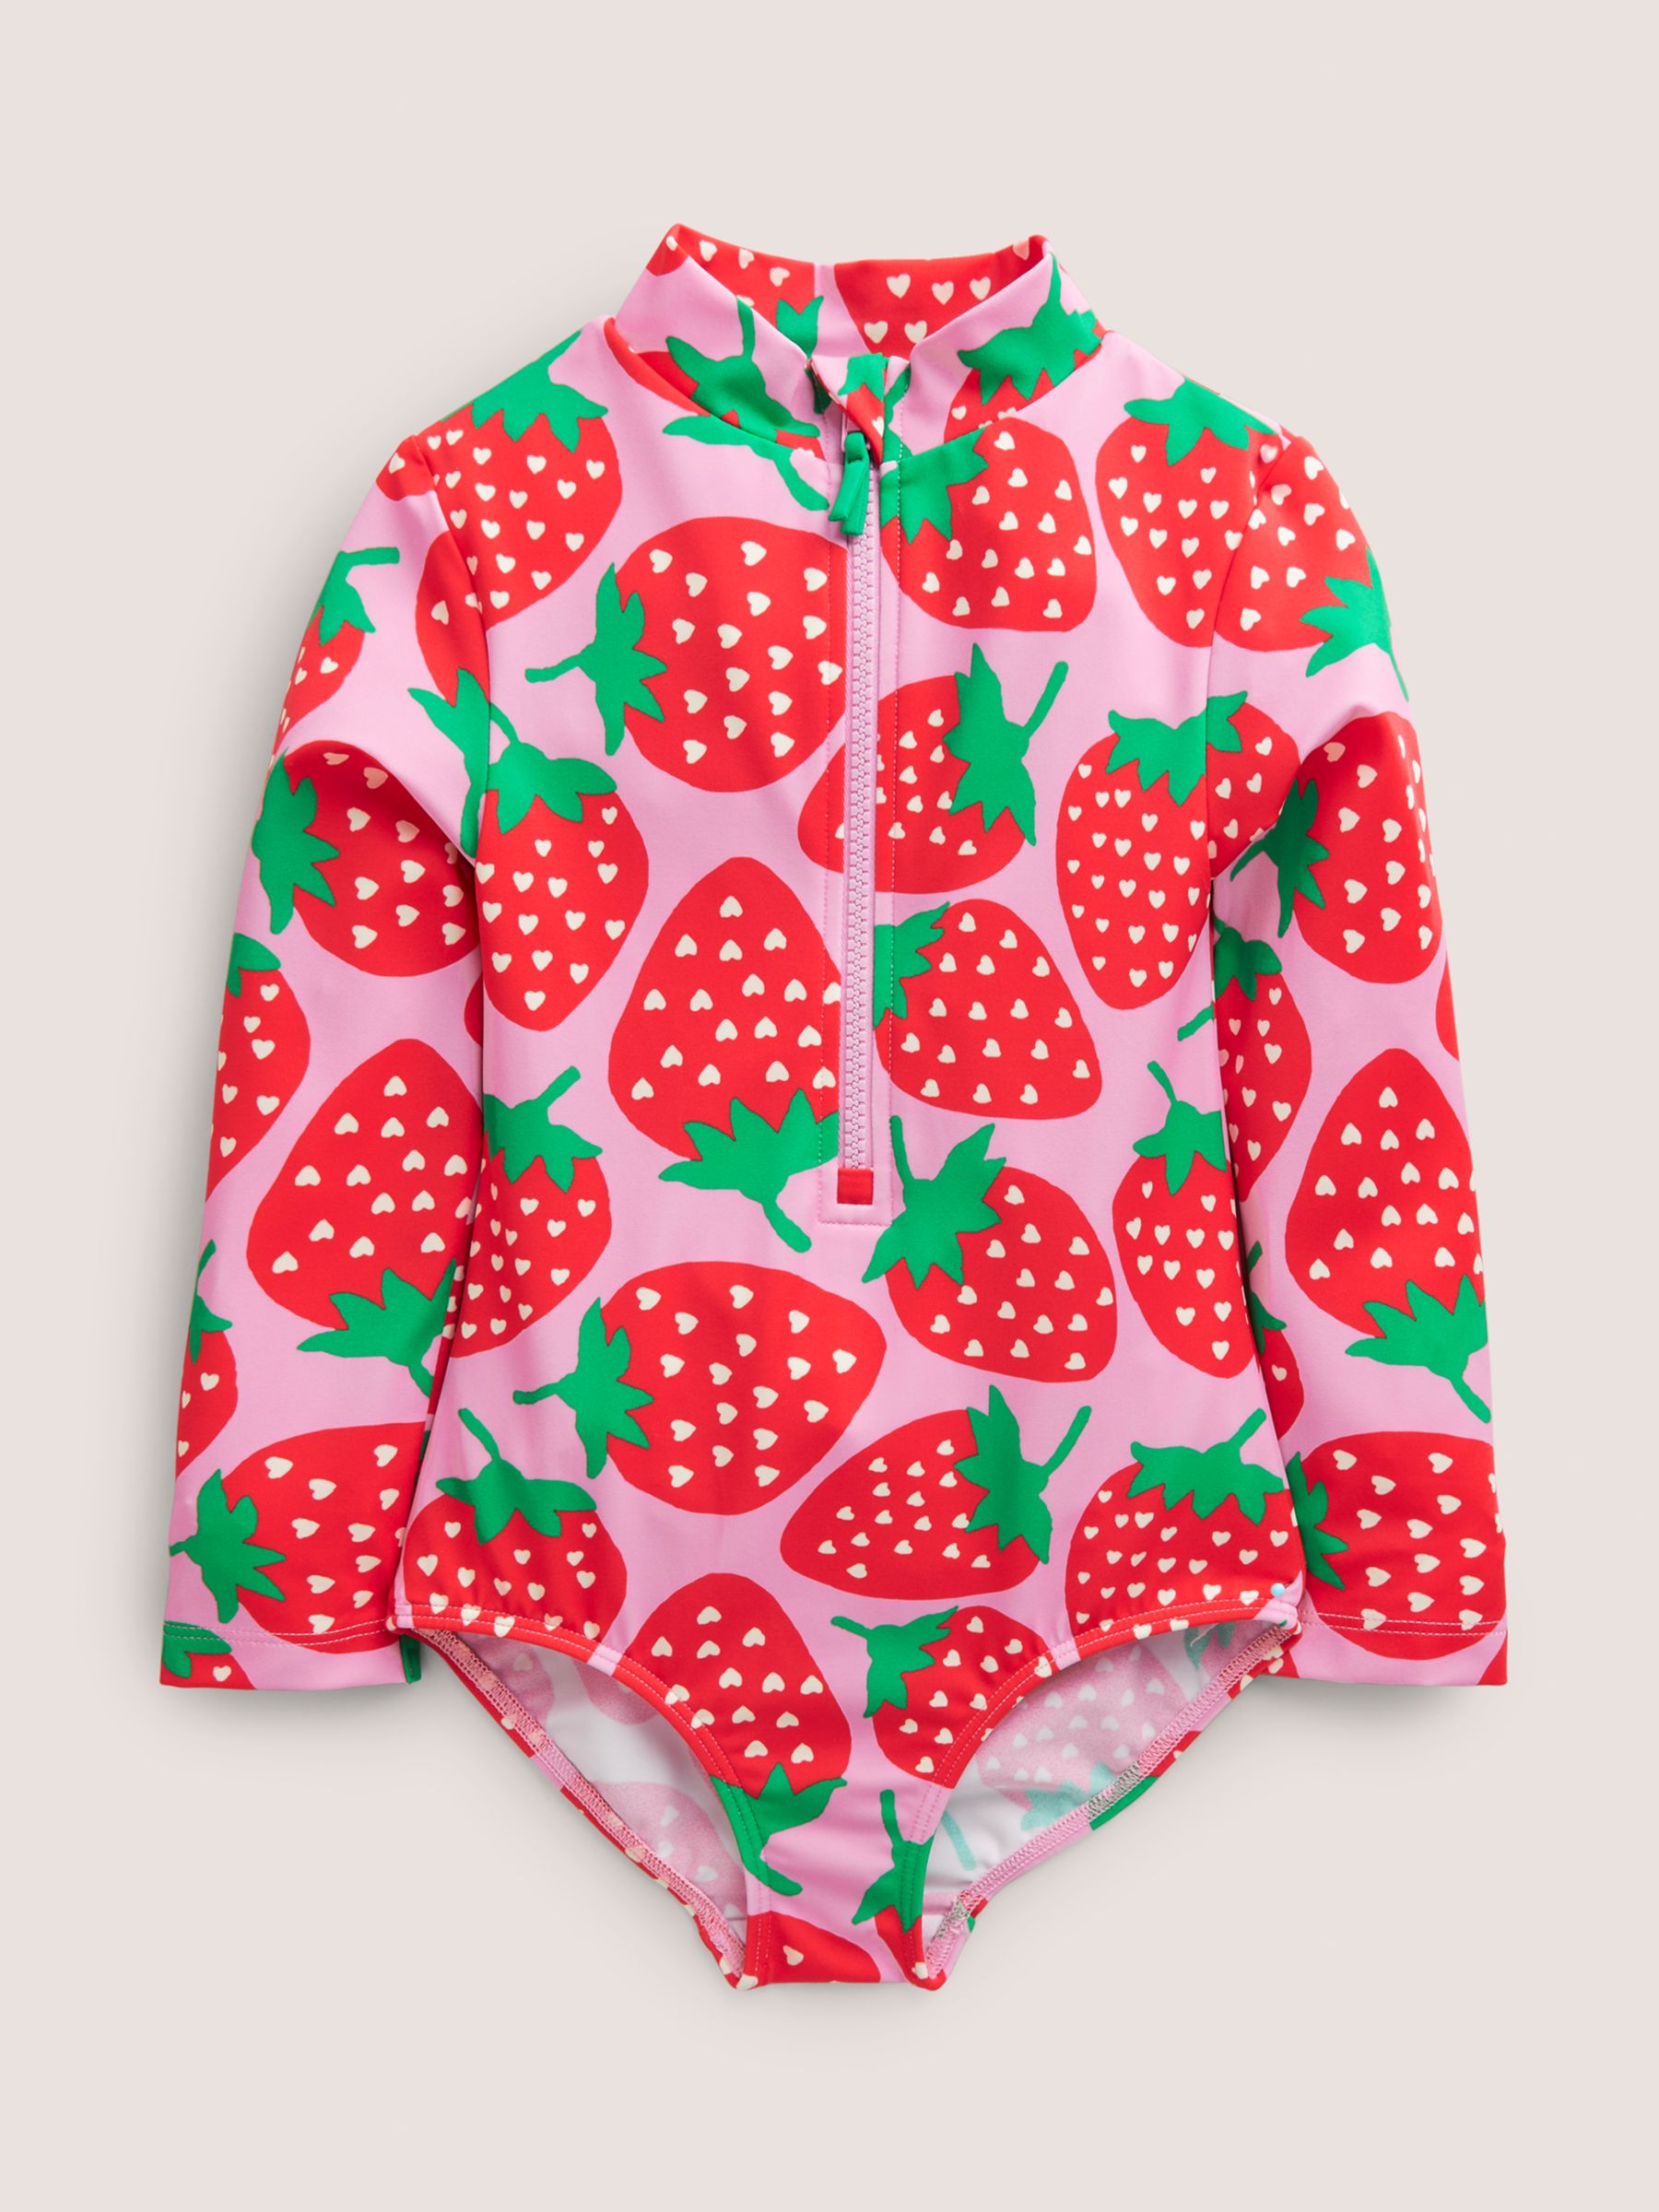 New Gucci White Strawberry One Piece Swimming Swim Bathing Suit Body M